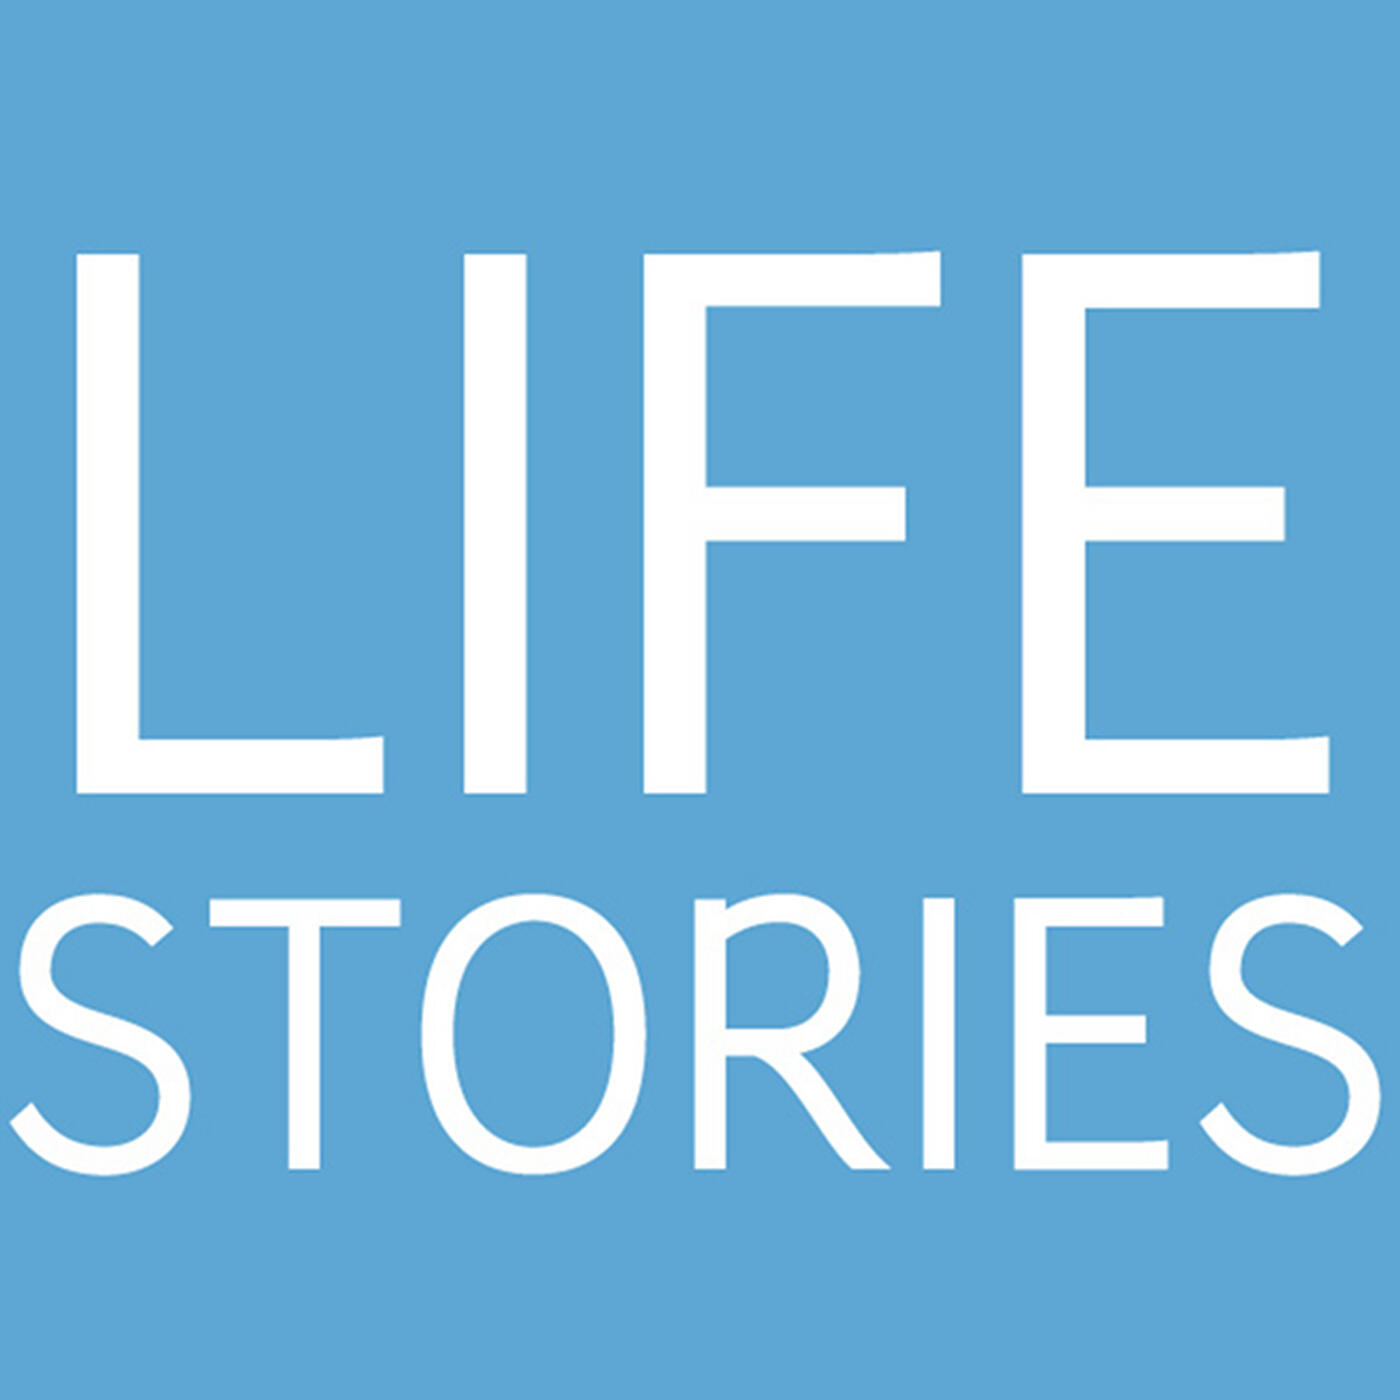 True life story. Life story. Логотип Life story. Real Life stories. Эндрю стори.